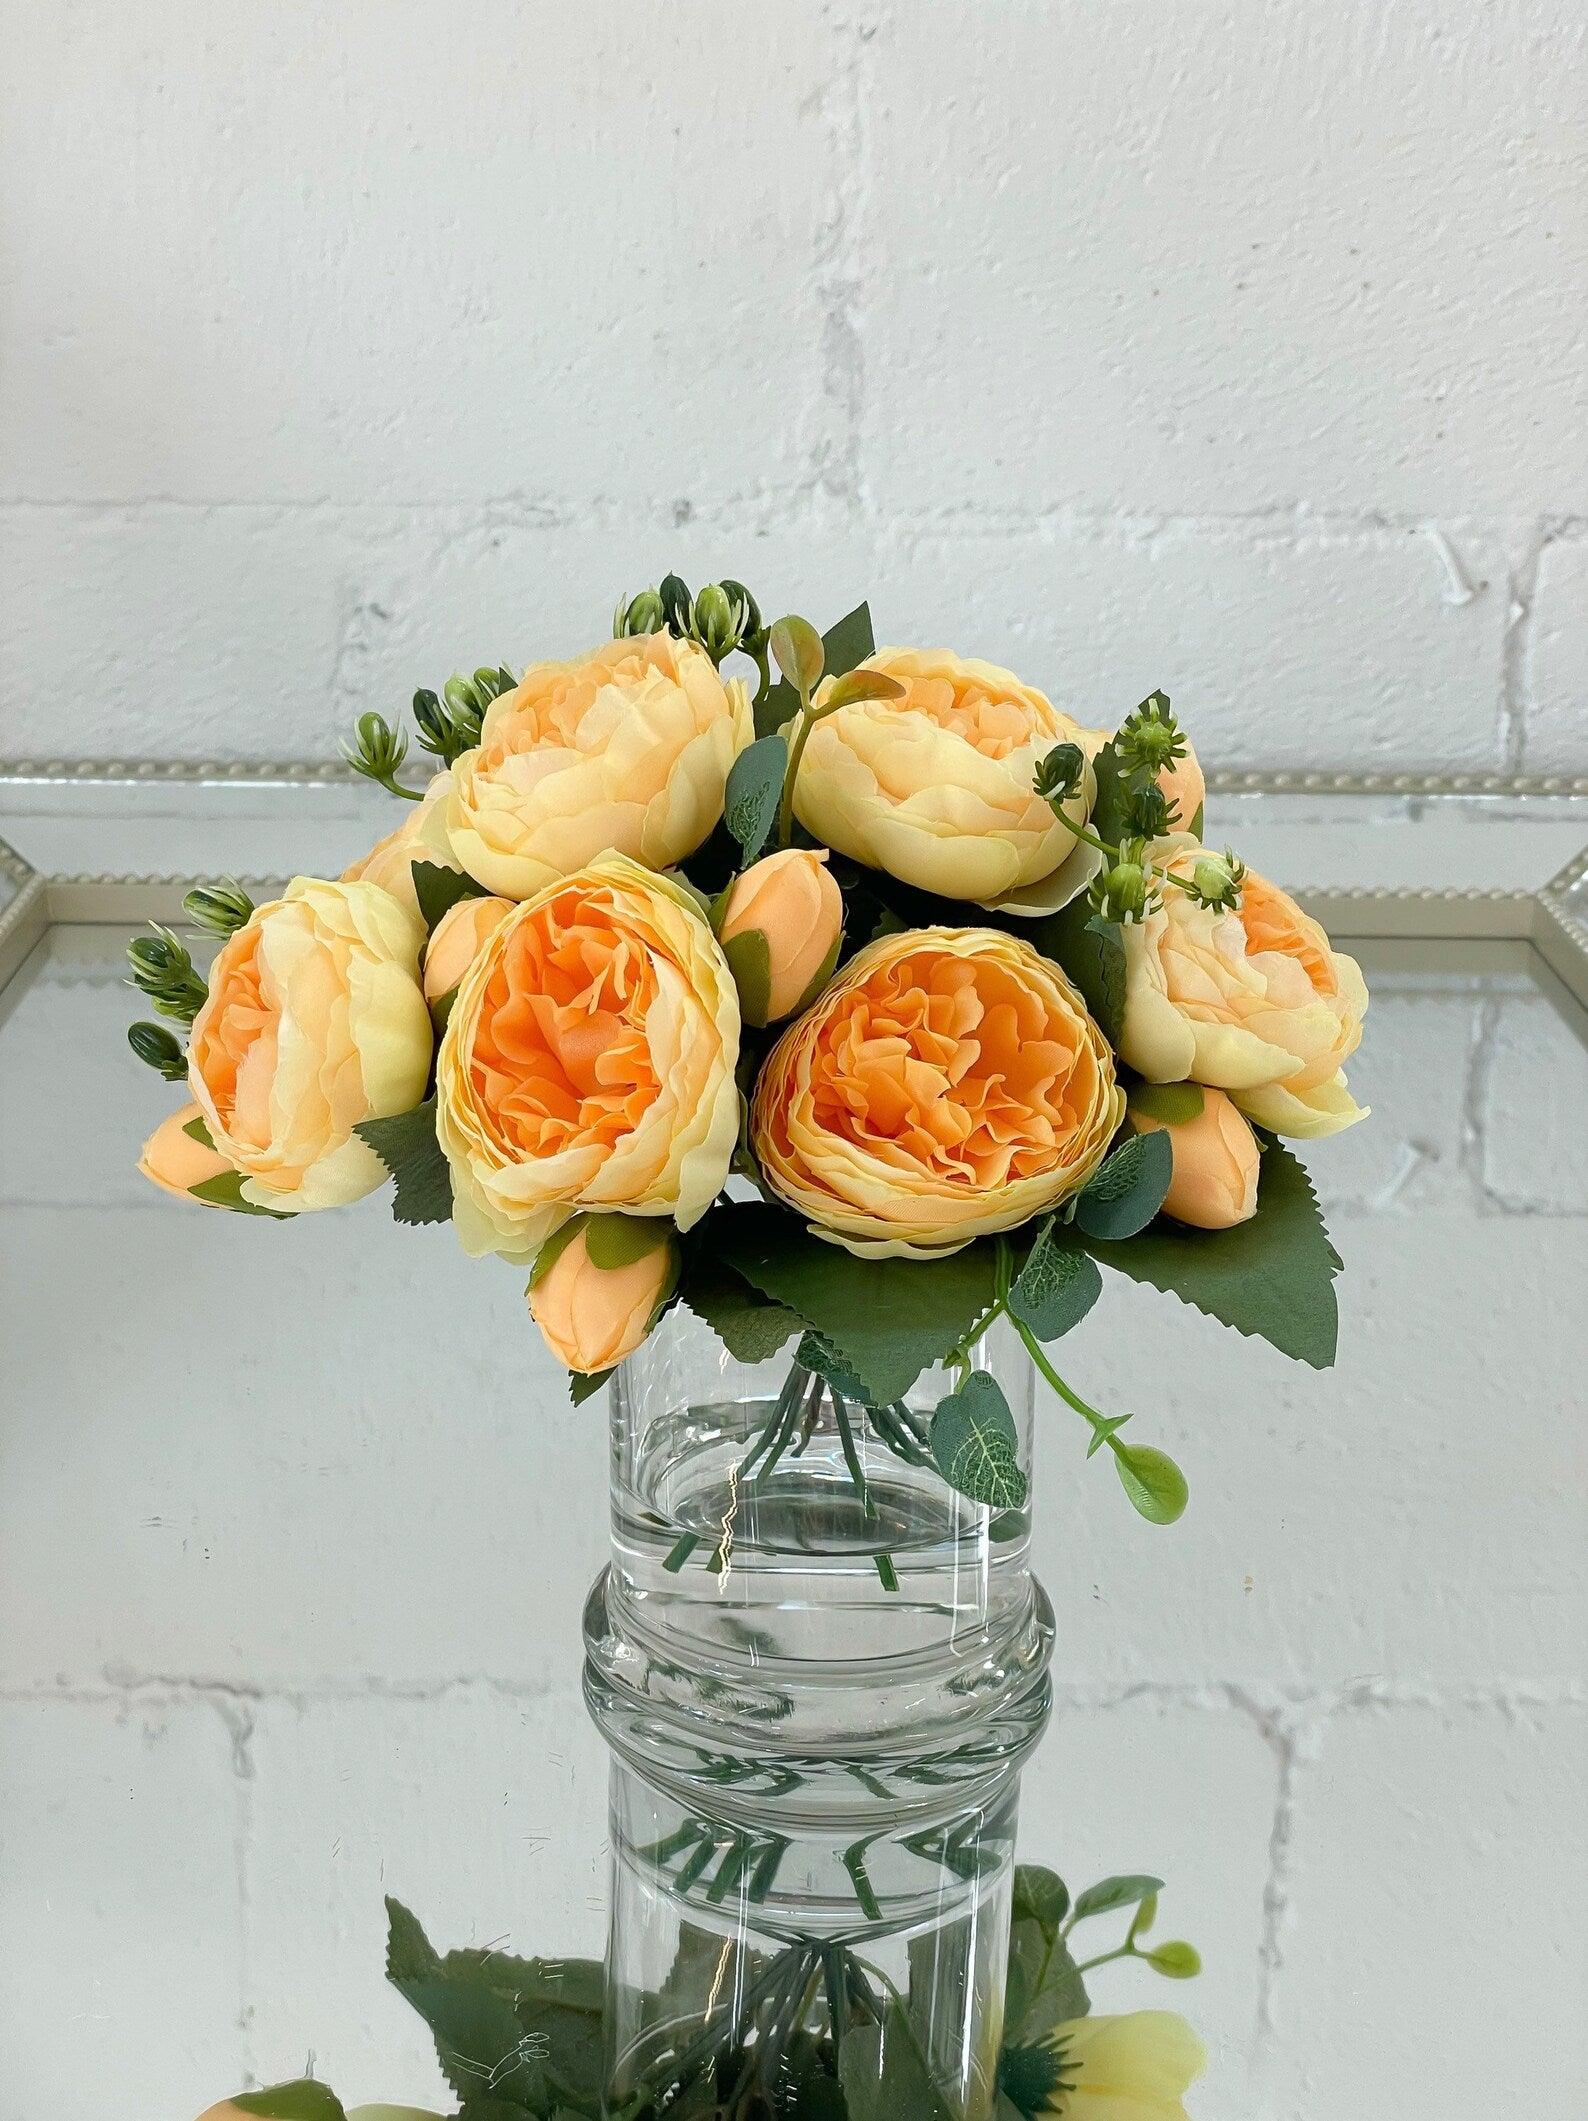 Rose Peonies Arrangement In Glass Vase - Flovery